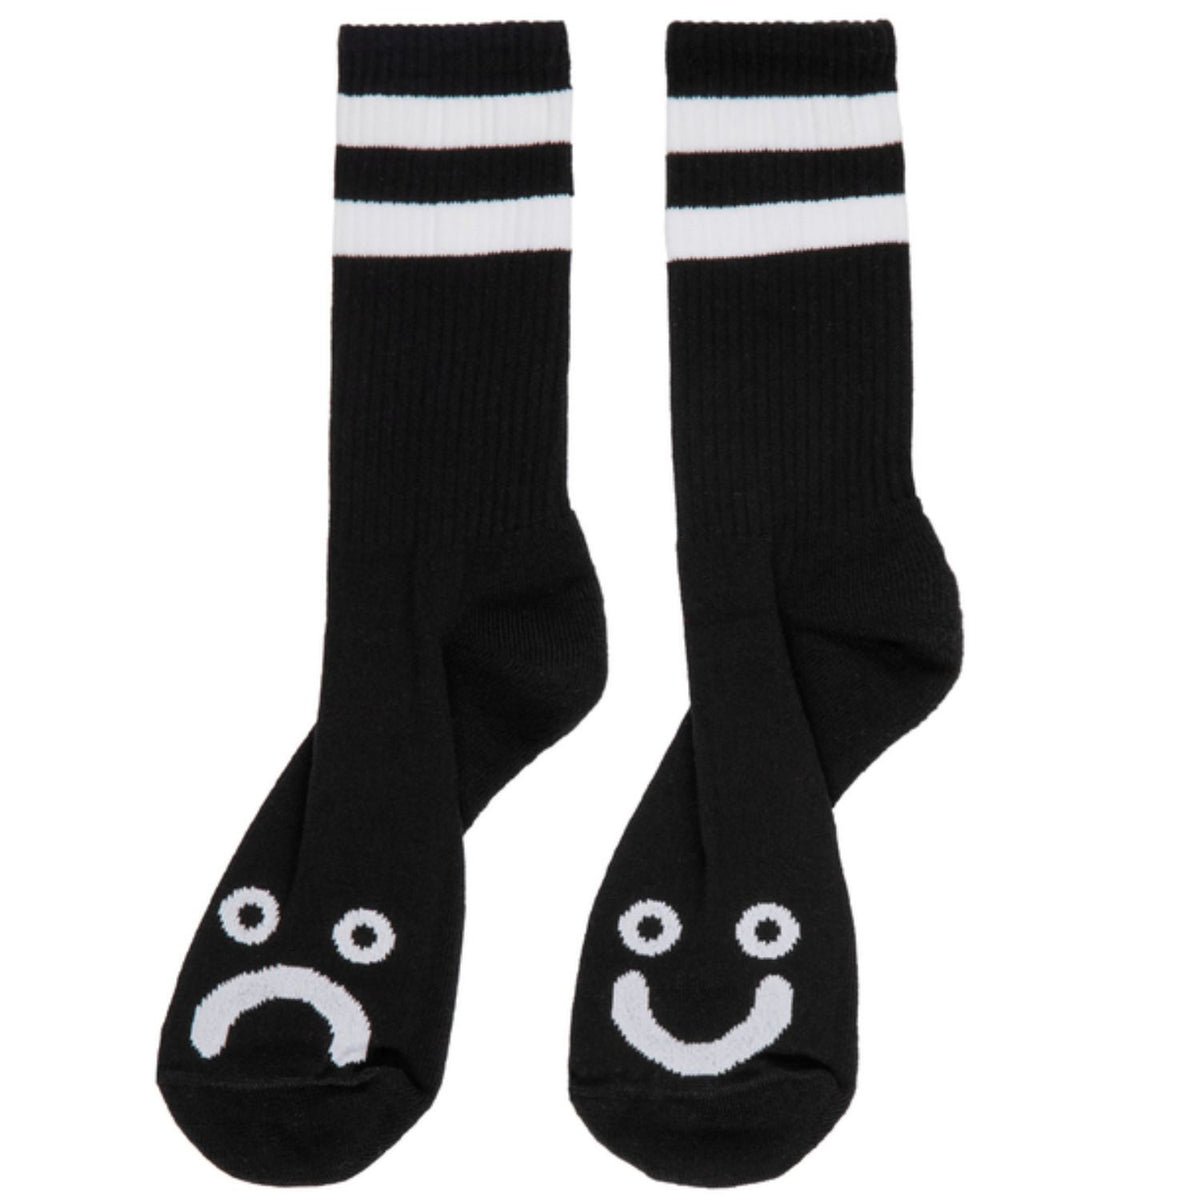 Polar - Happy Sad Socks - Black - Size 35-38